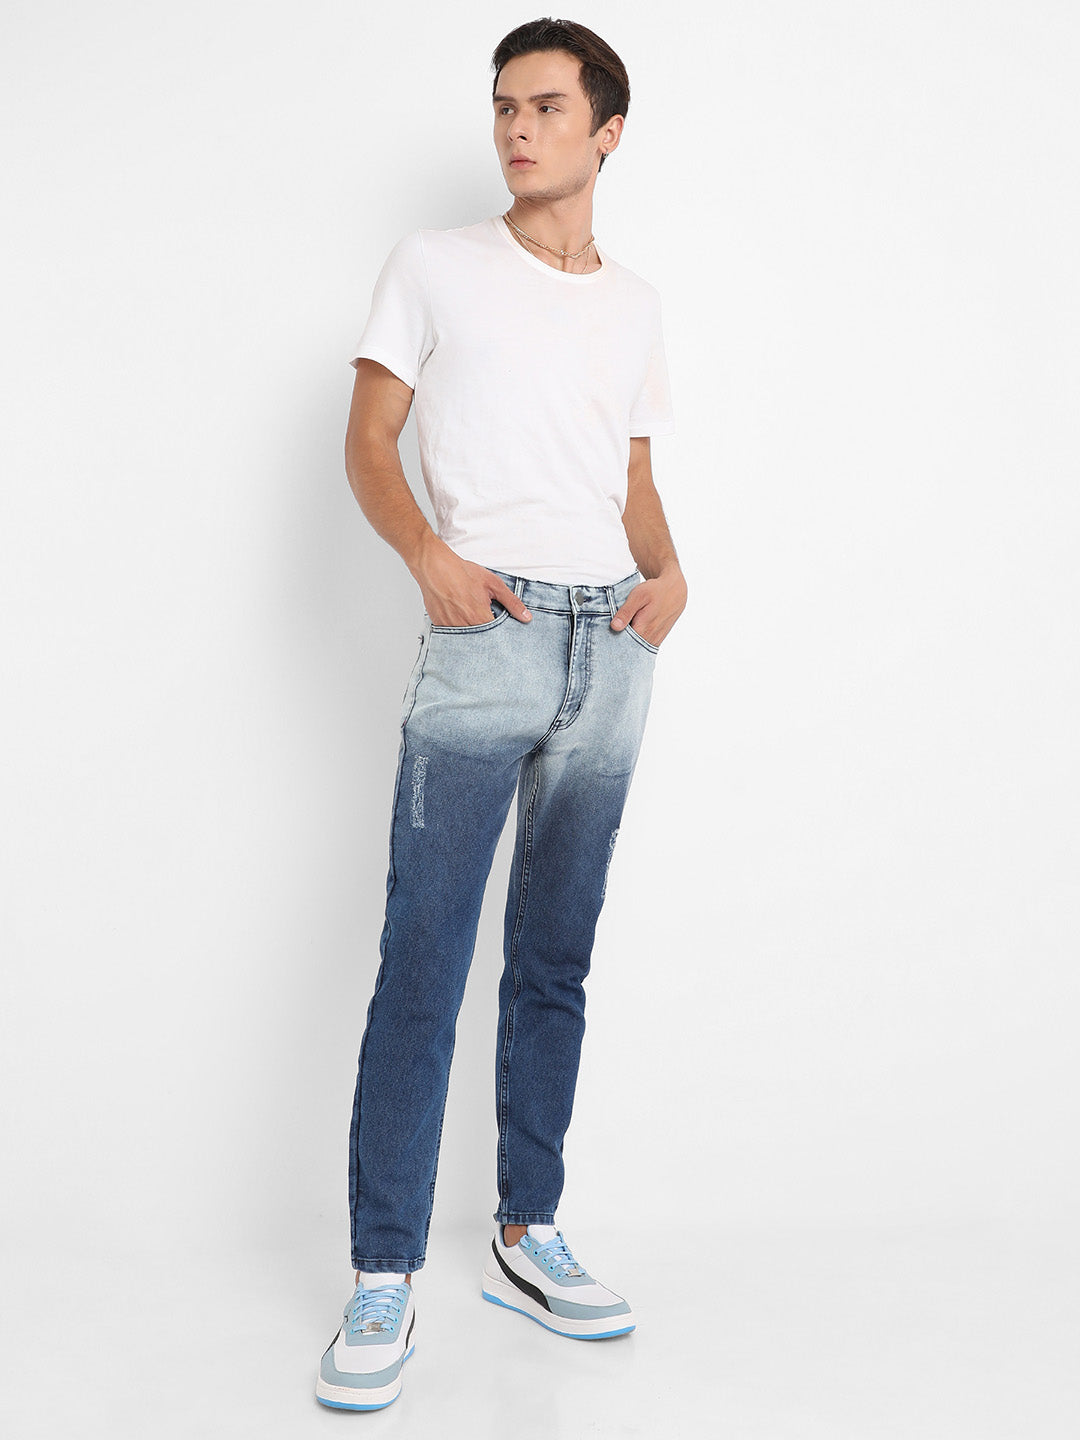 Contrast Ombre Denim Jeans